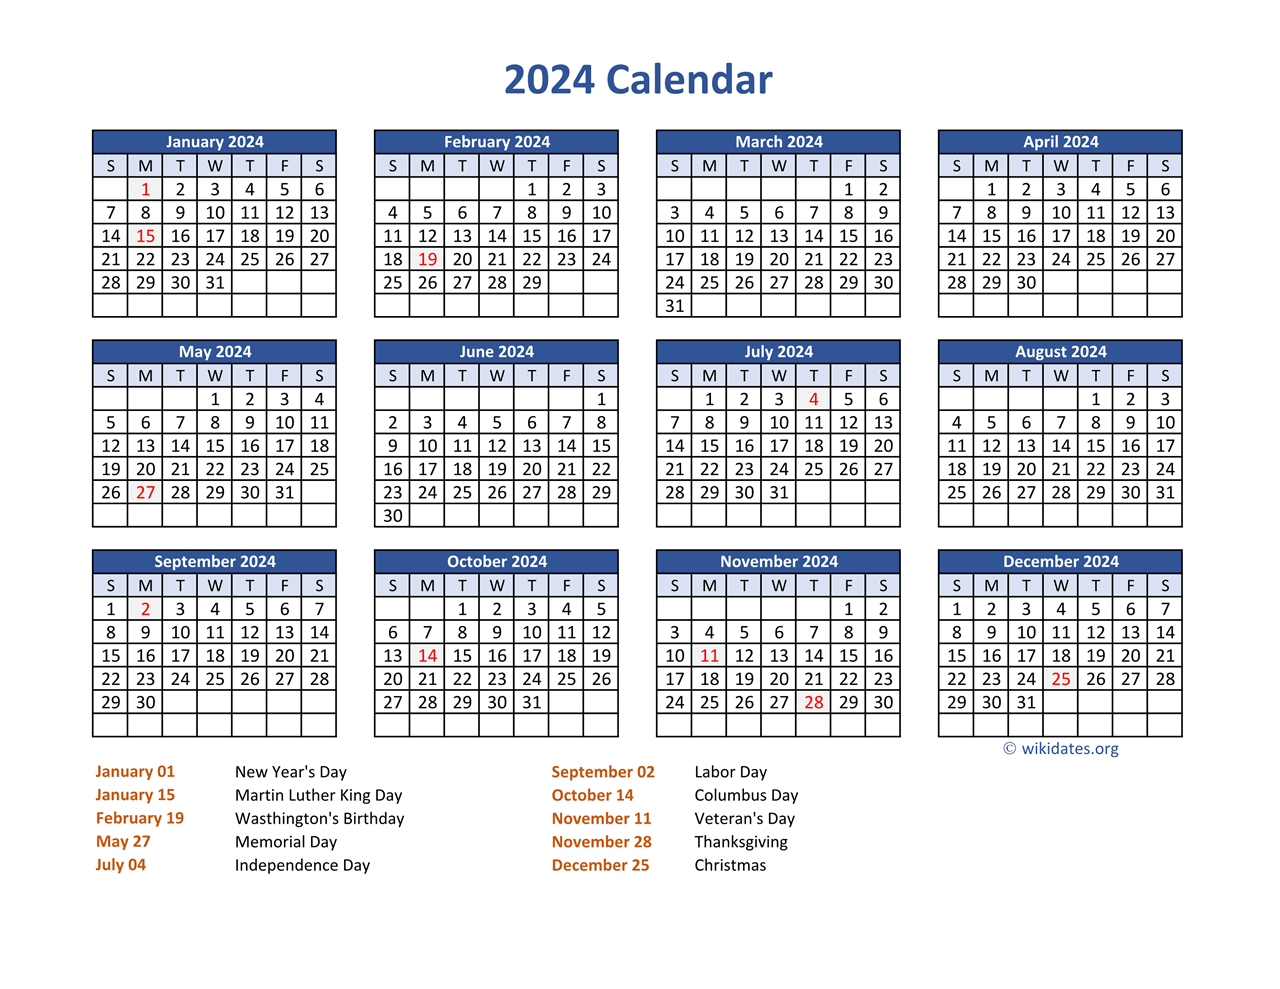 Pdf Calendar 2024 With Federal Holidays | Wikidates for 2024 Calendar With Holidays Printable Usa